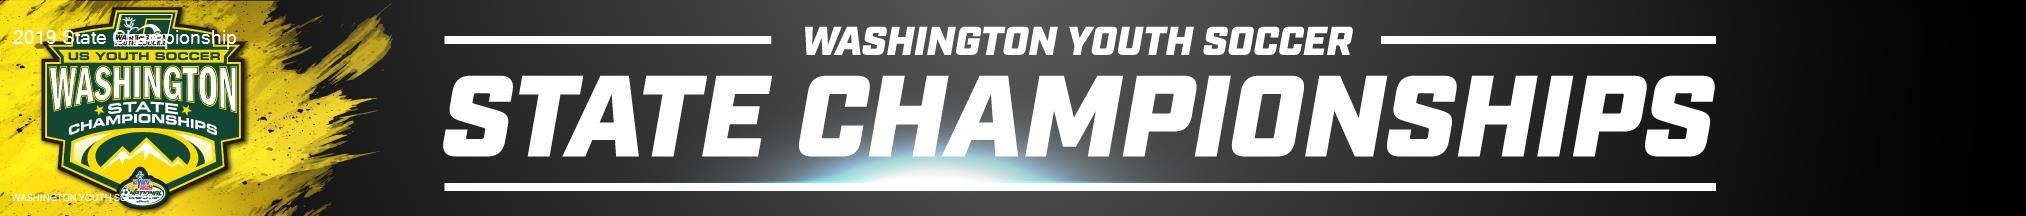 2019 Washington Youth Soccer State Championship banner